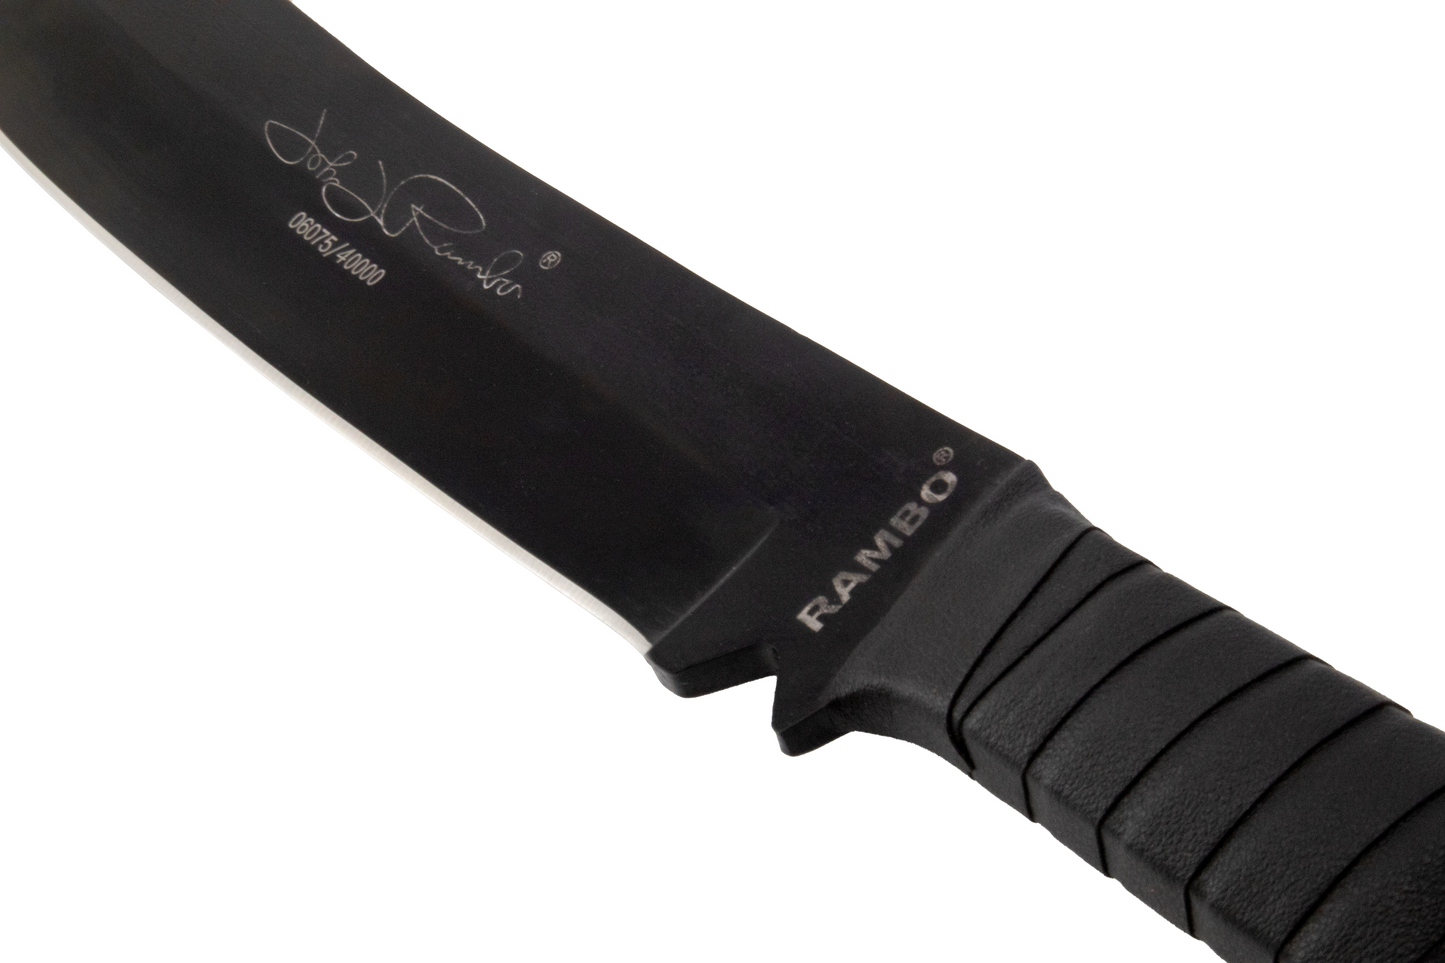 RAMBO PART IV MACHETE KNIFE SIGNATURE EDITION HUNTING KNIFE WITH LEATHER SHEATH